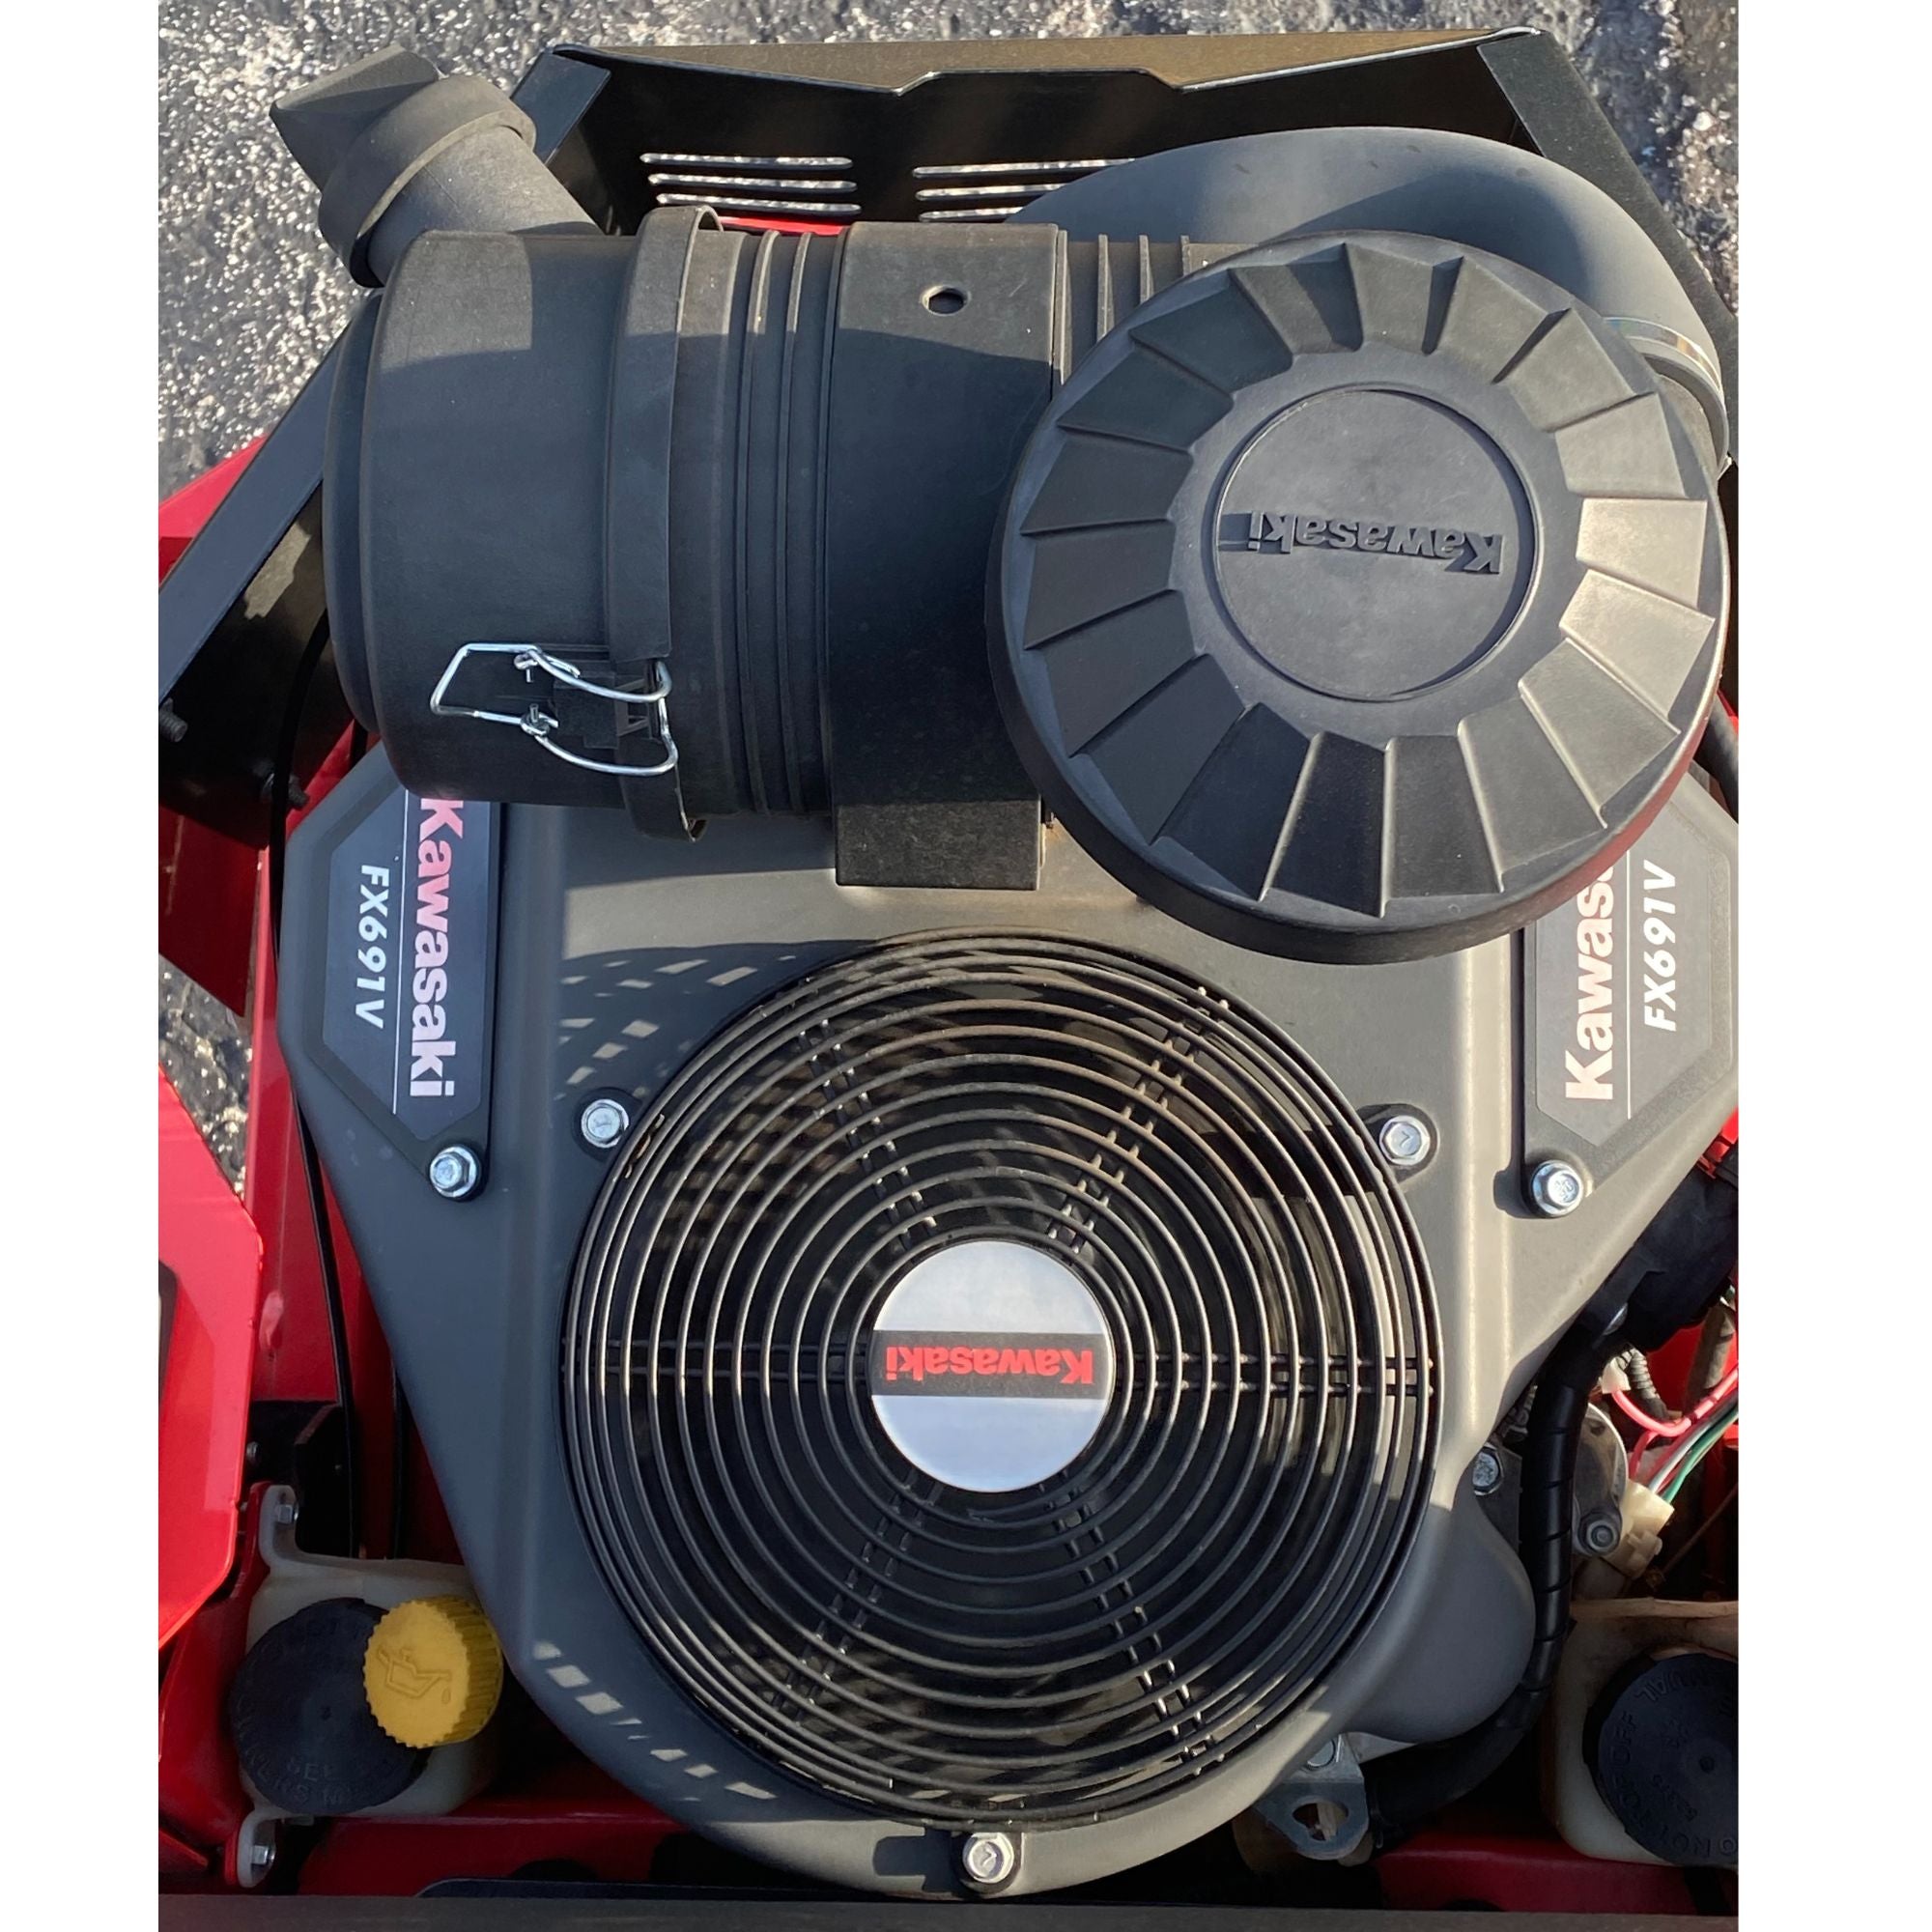 2019 Gravely ProTurn ZX52 | 52" Deck | Kawasaki FX691V | Zero Turn Mower| Used